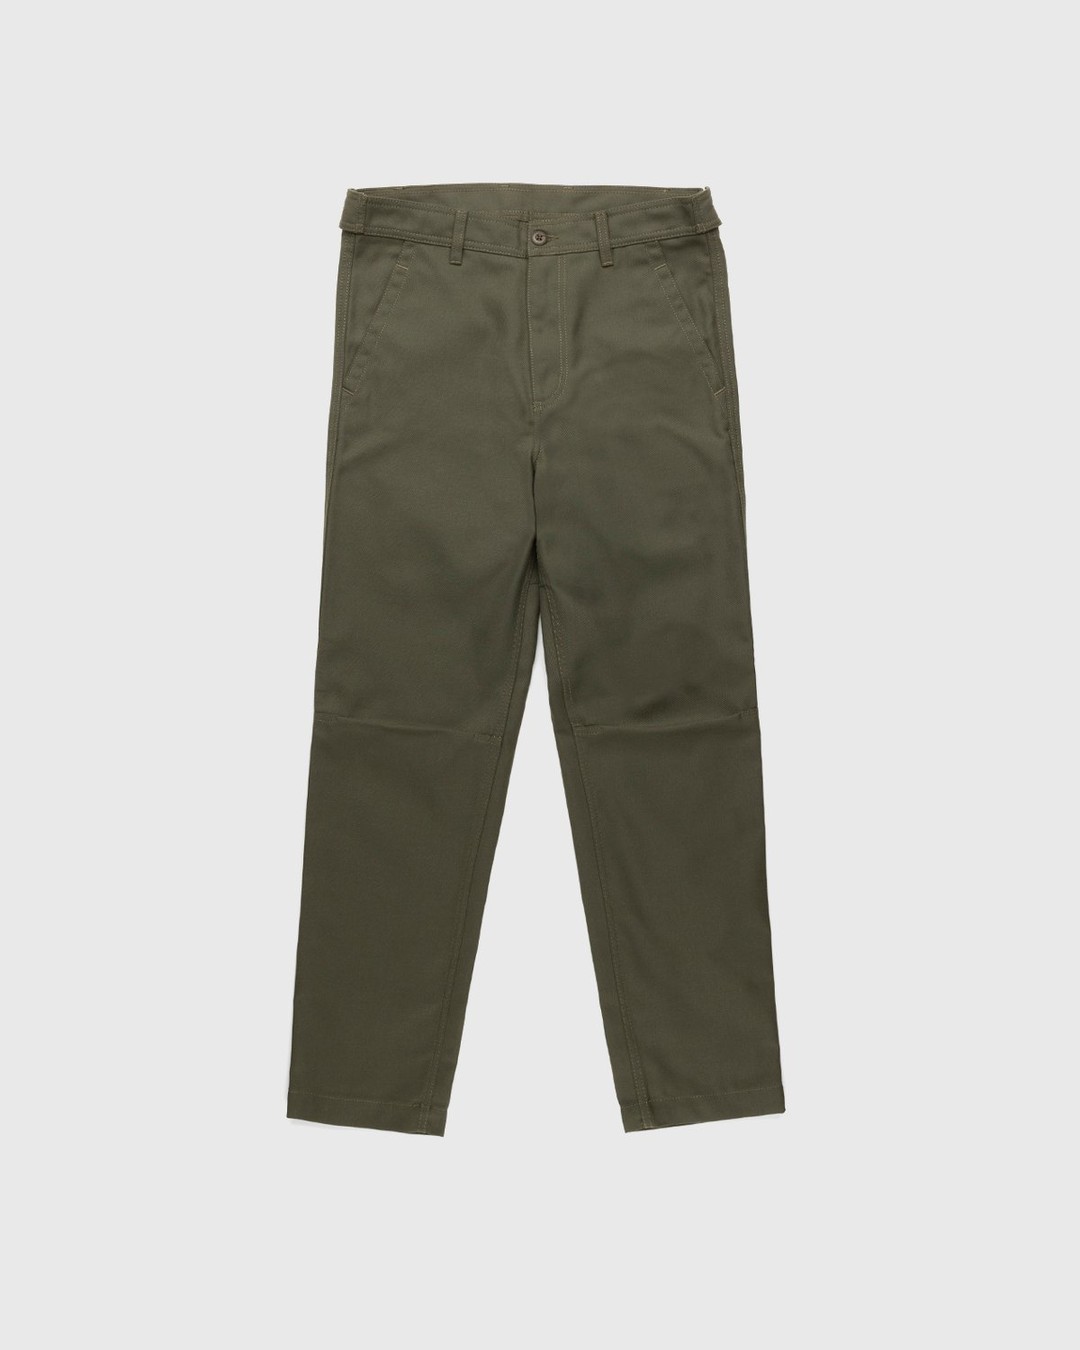 Carhartt WIP – Barton Pant Cypress - Trousers - Green - Image 1